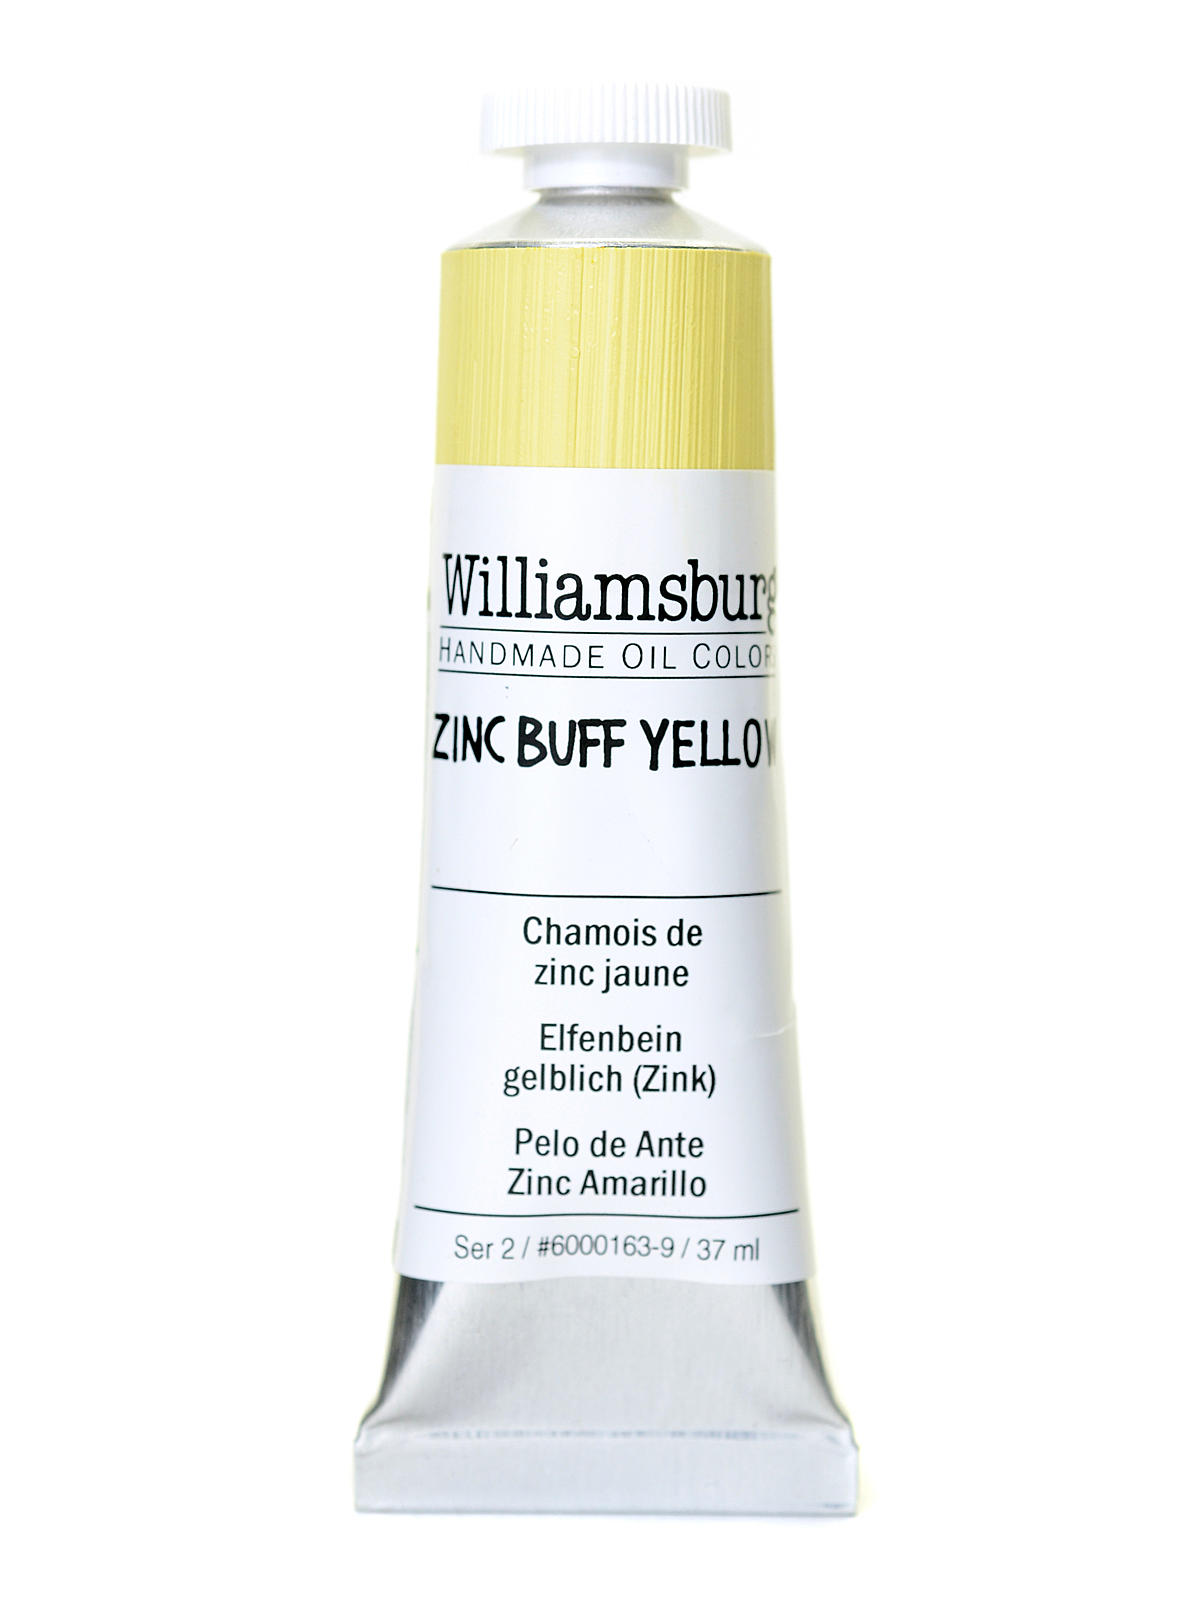 Handmade Oil Colors Zinc Buff Yellowish 37 Ml